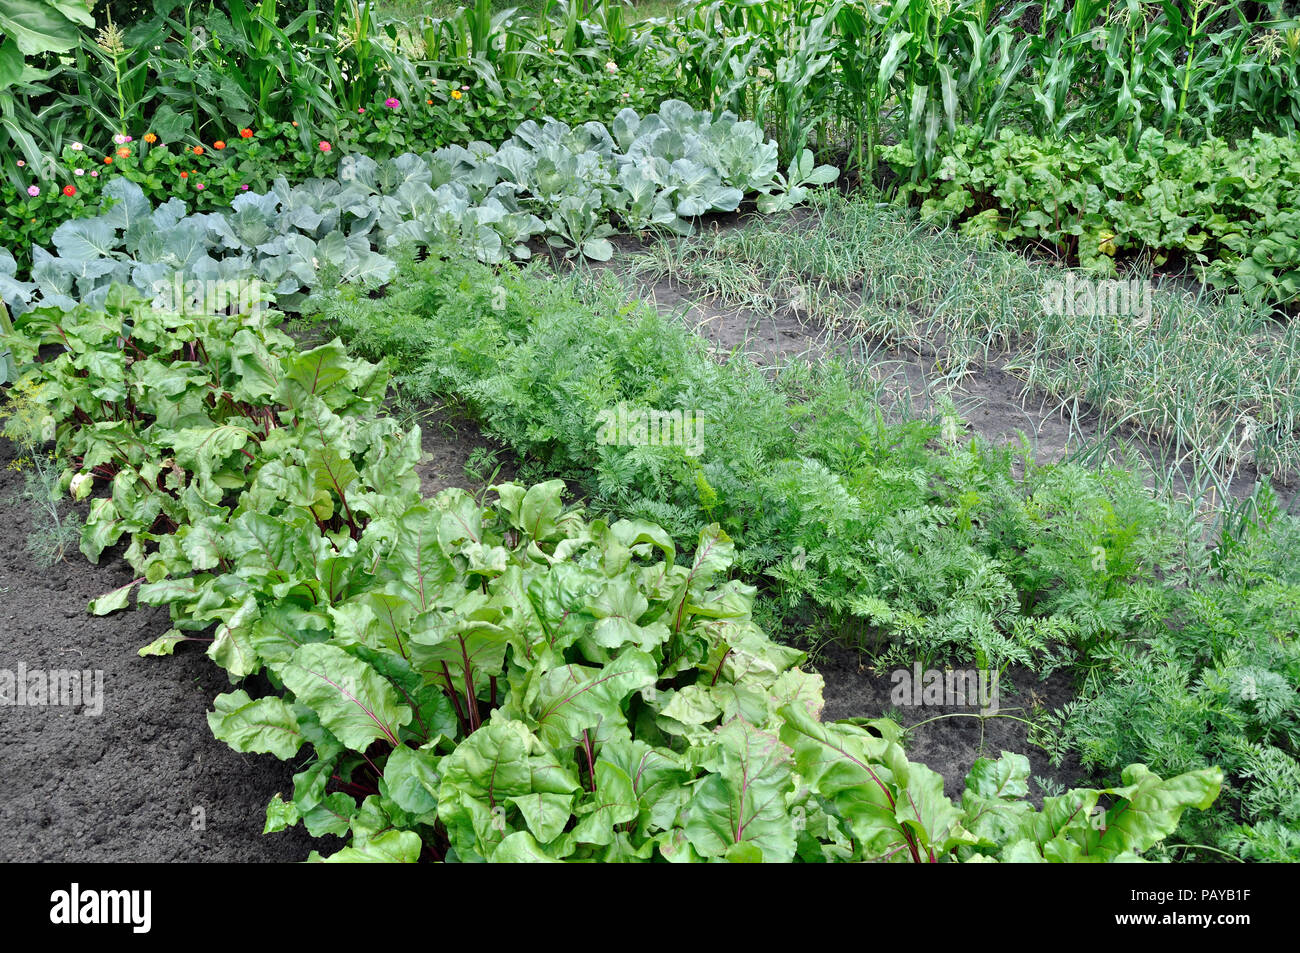 Coltivate biologicamente varie verdure nel giardino vegetale Foto Stock